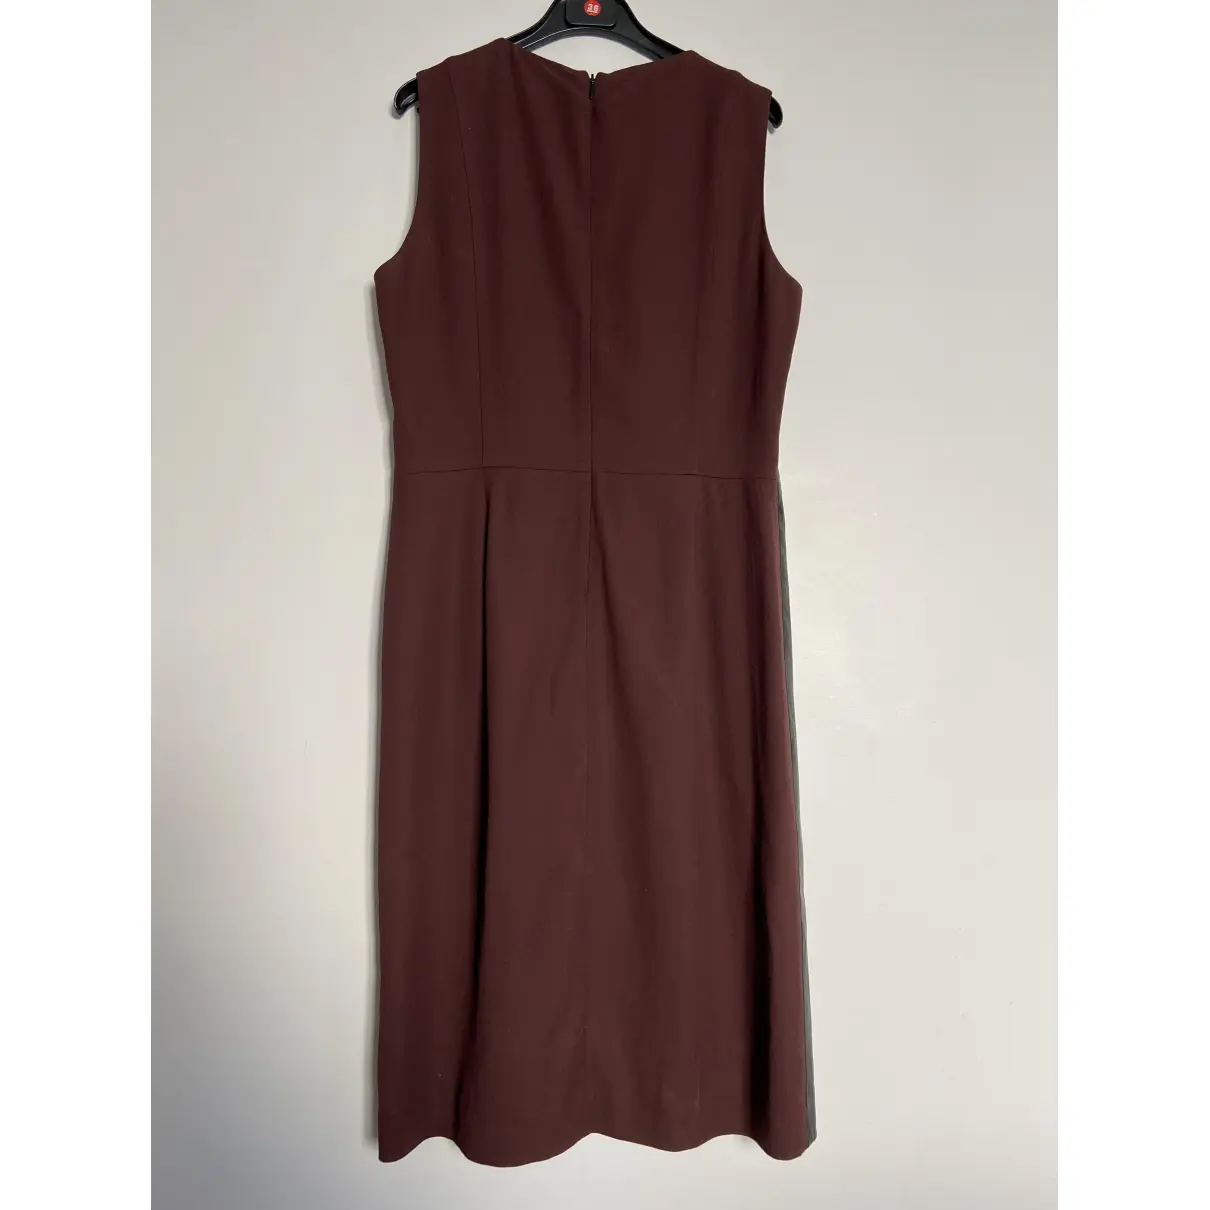 Buy Gerard Darel Leather dress online